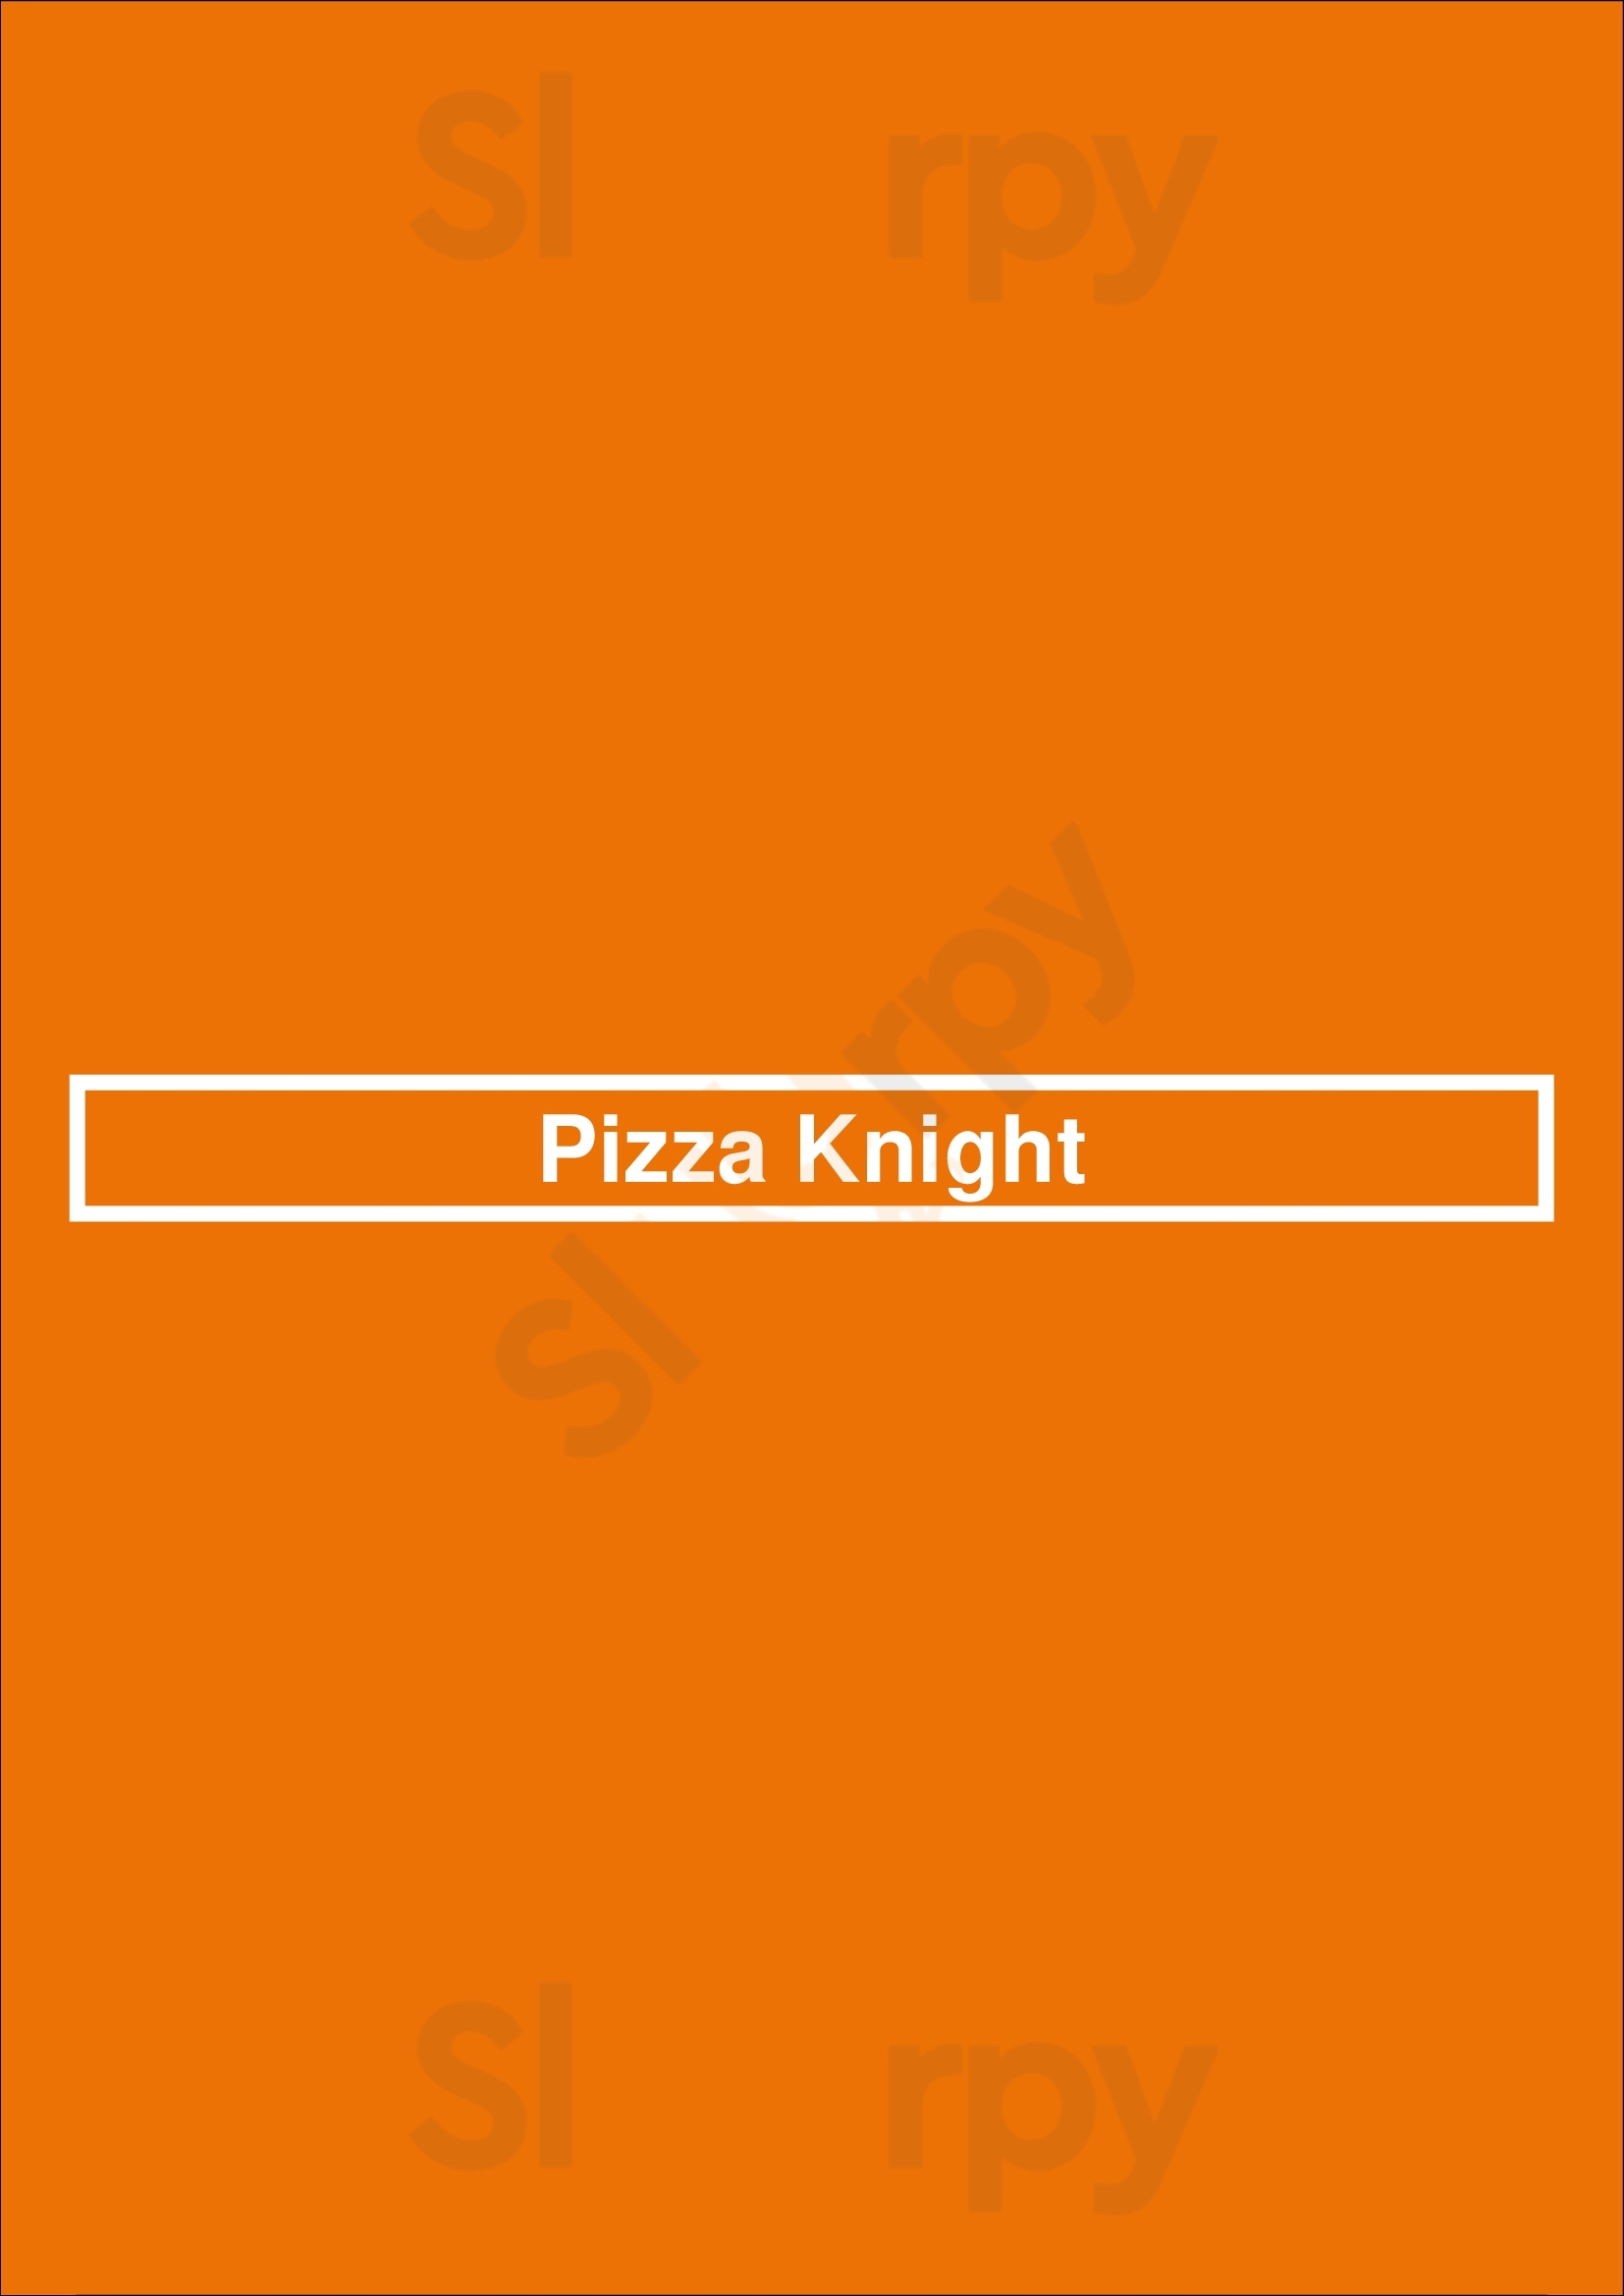 Pizza Knight Surrey Menu - 1